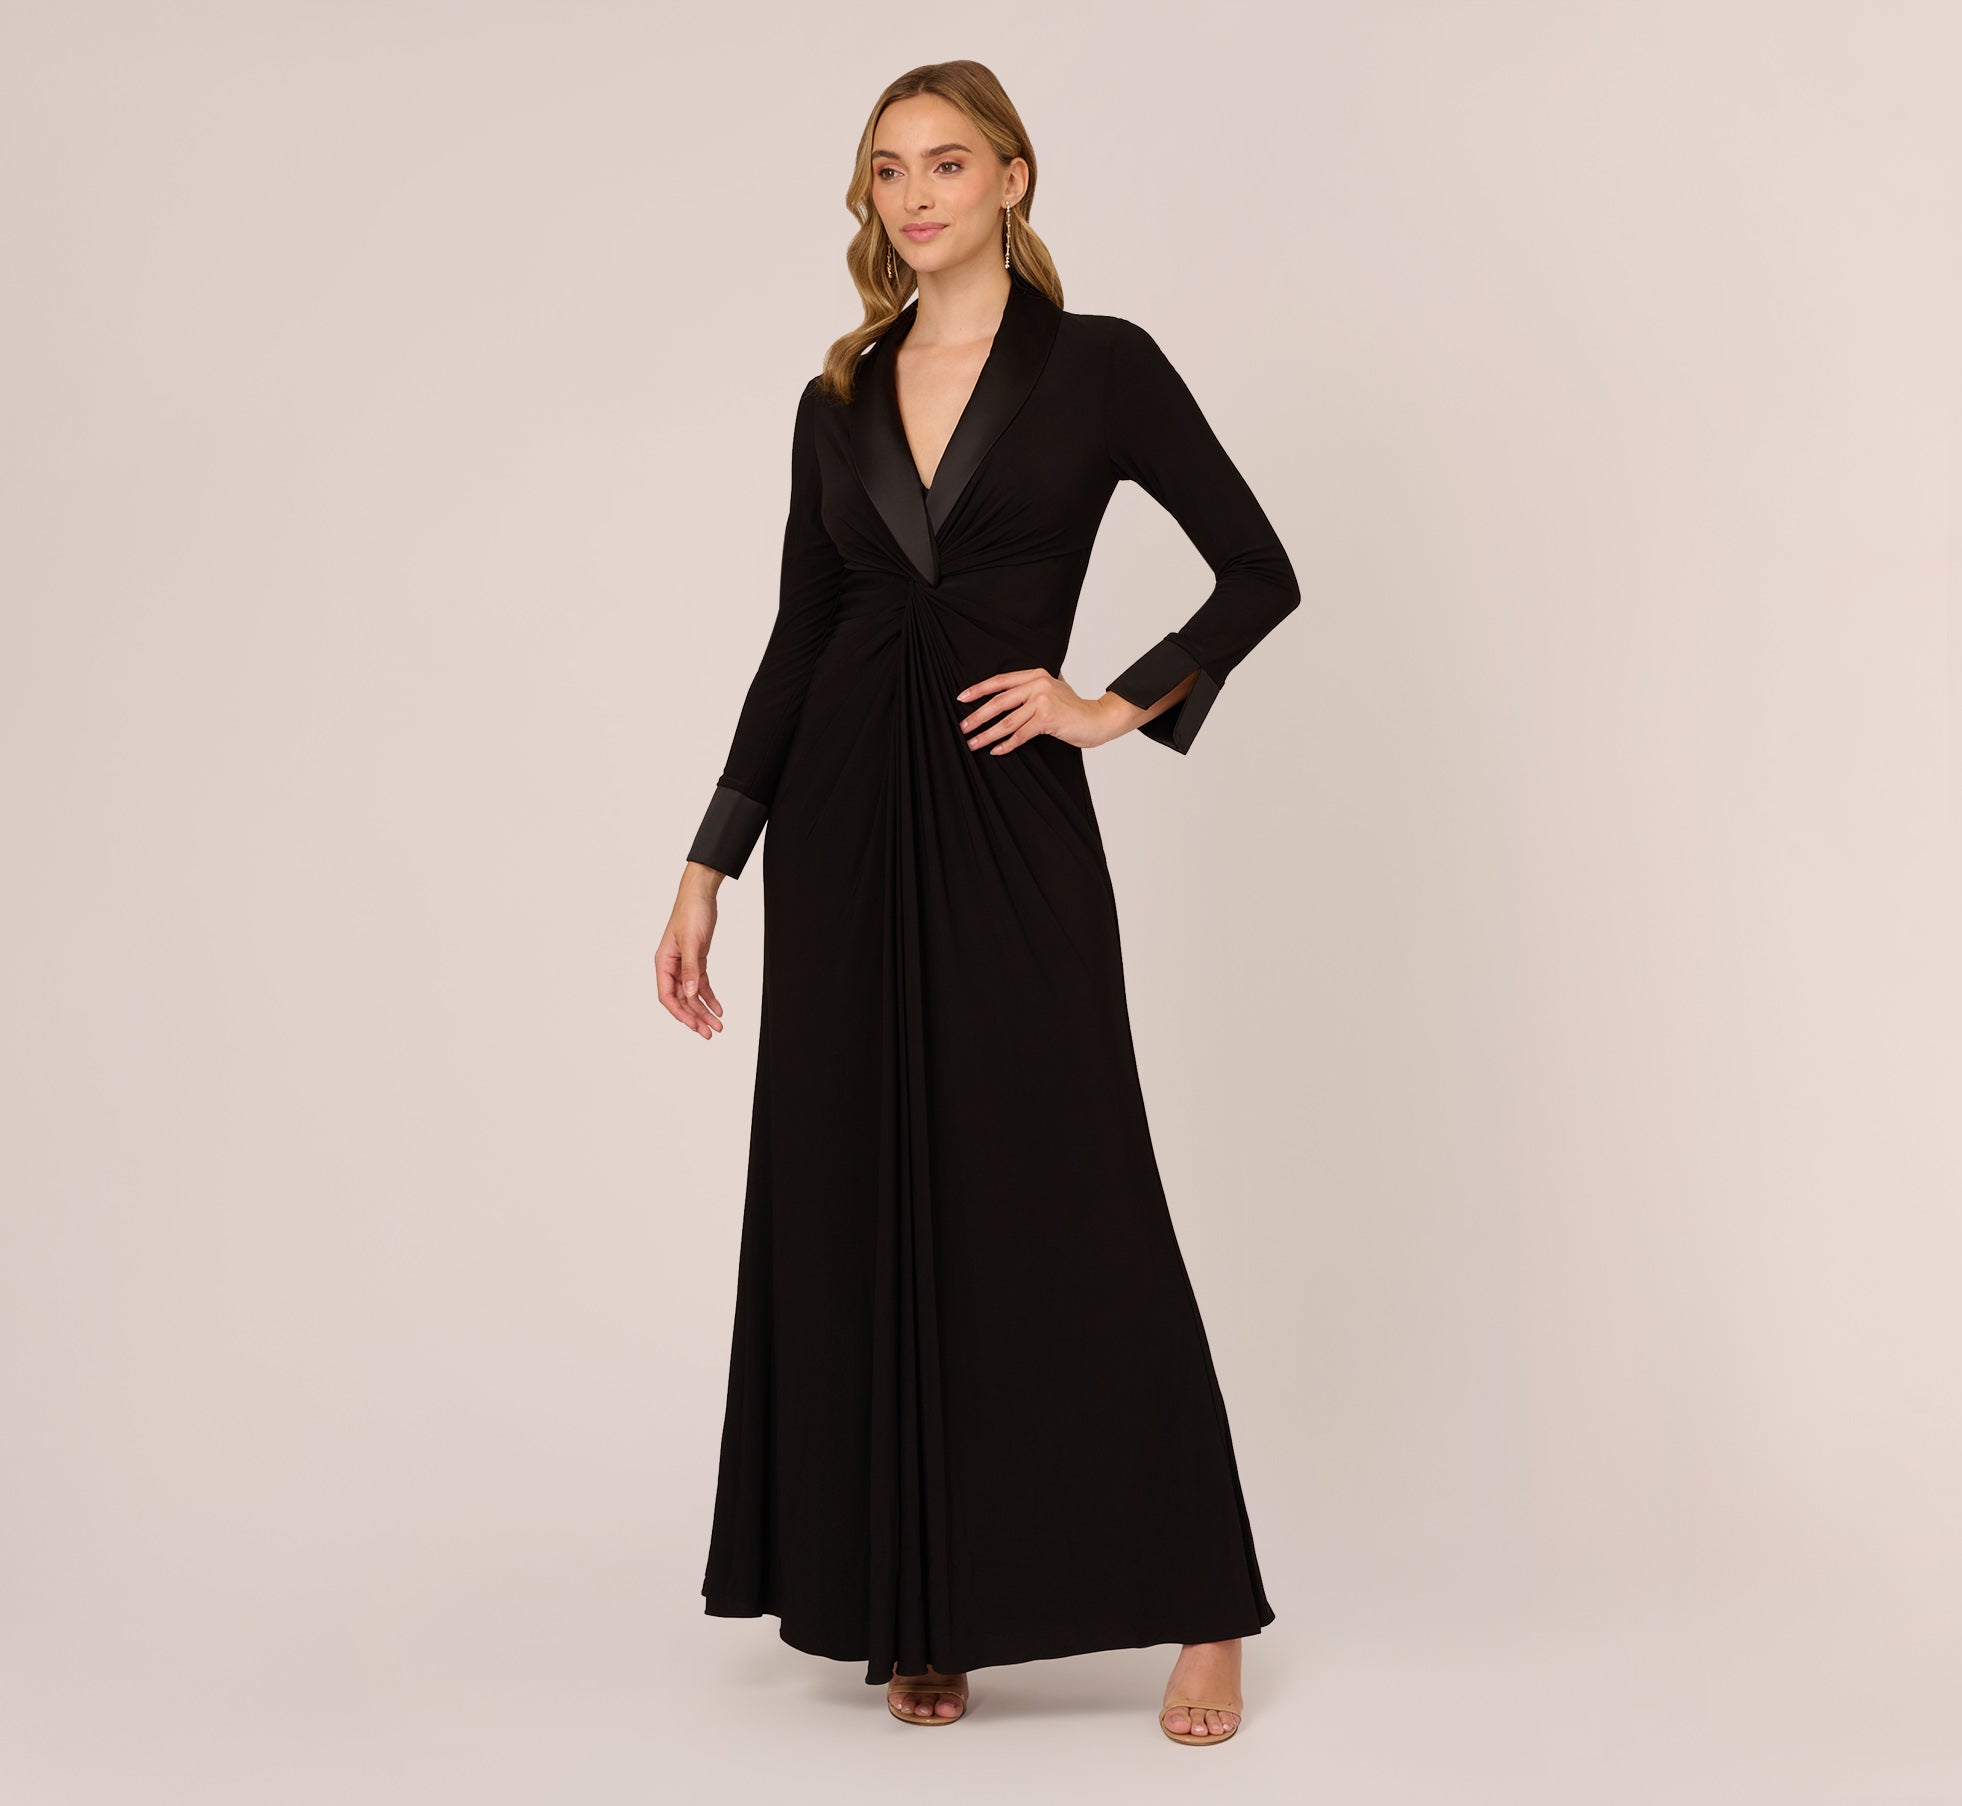 Nathalie Black Lace Tuxedo Dress | Bestsellers | Collections | L.K.Bennett,  London